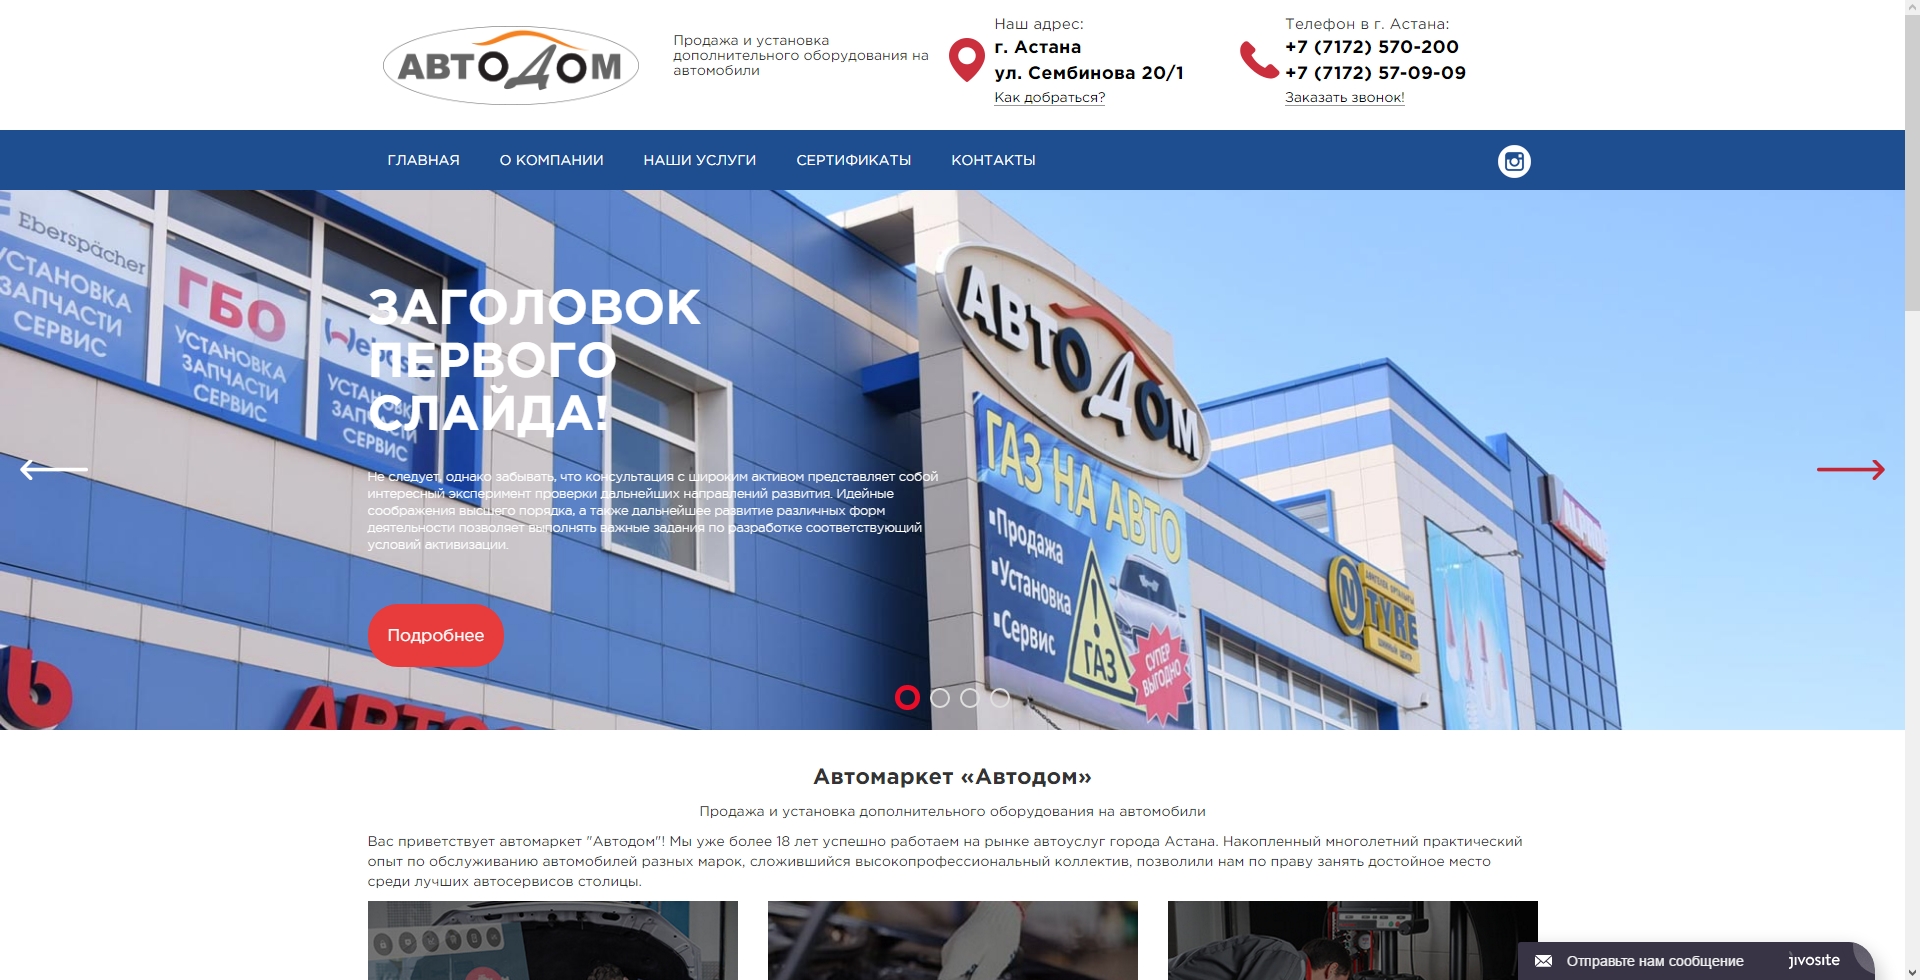 Создание сайта автосервиса Автодом, г. Астана - http://autodomservis.kz/